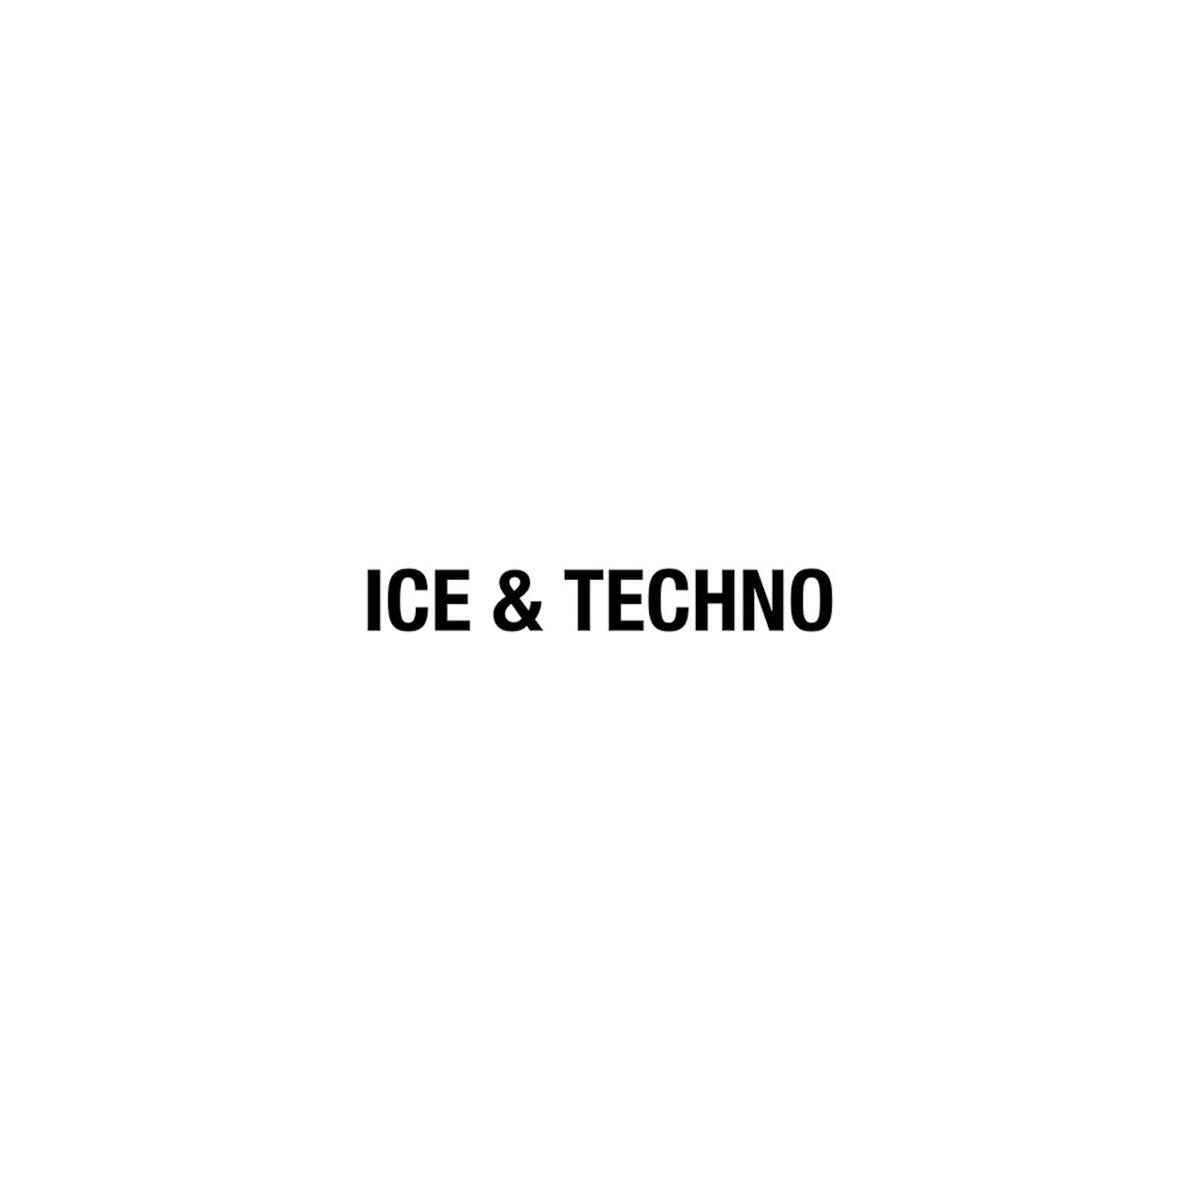 ICE & TECHNO (アイスアンドテクノ) 公式通販 - PAN KANAZAWA ONLINE